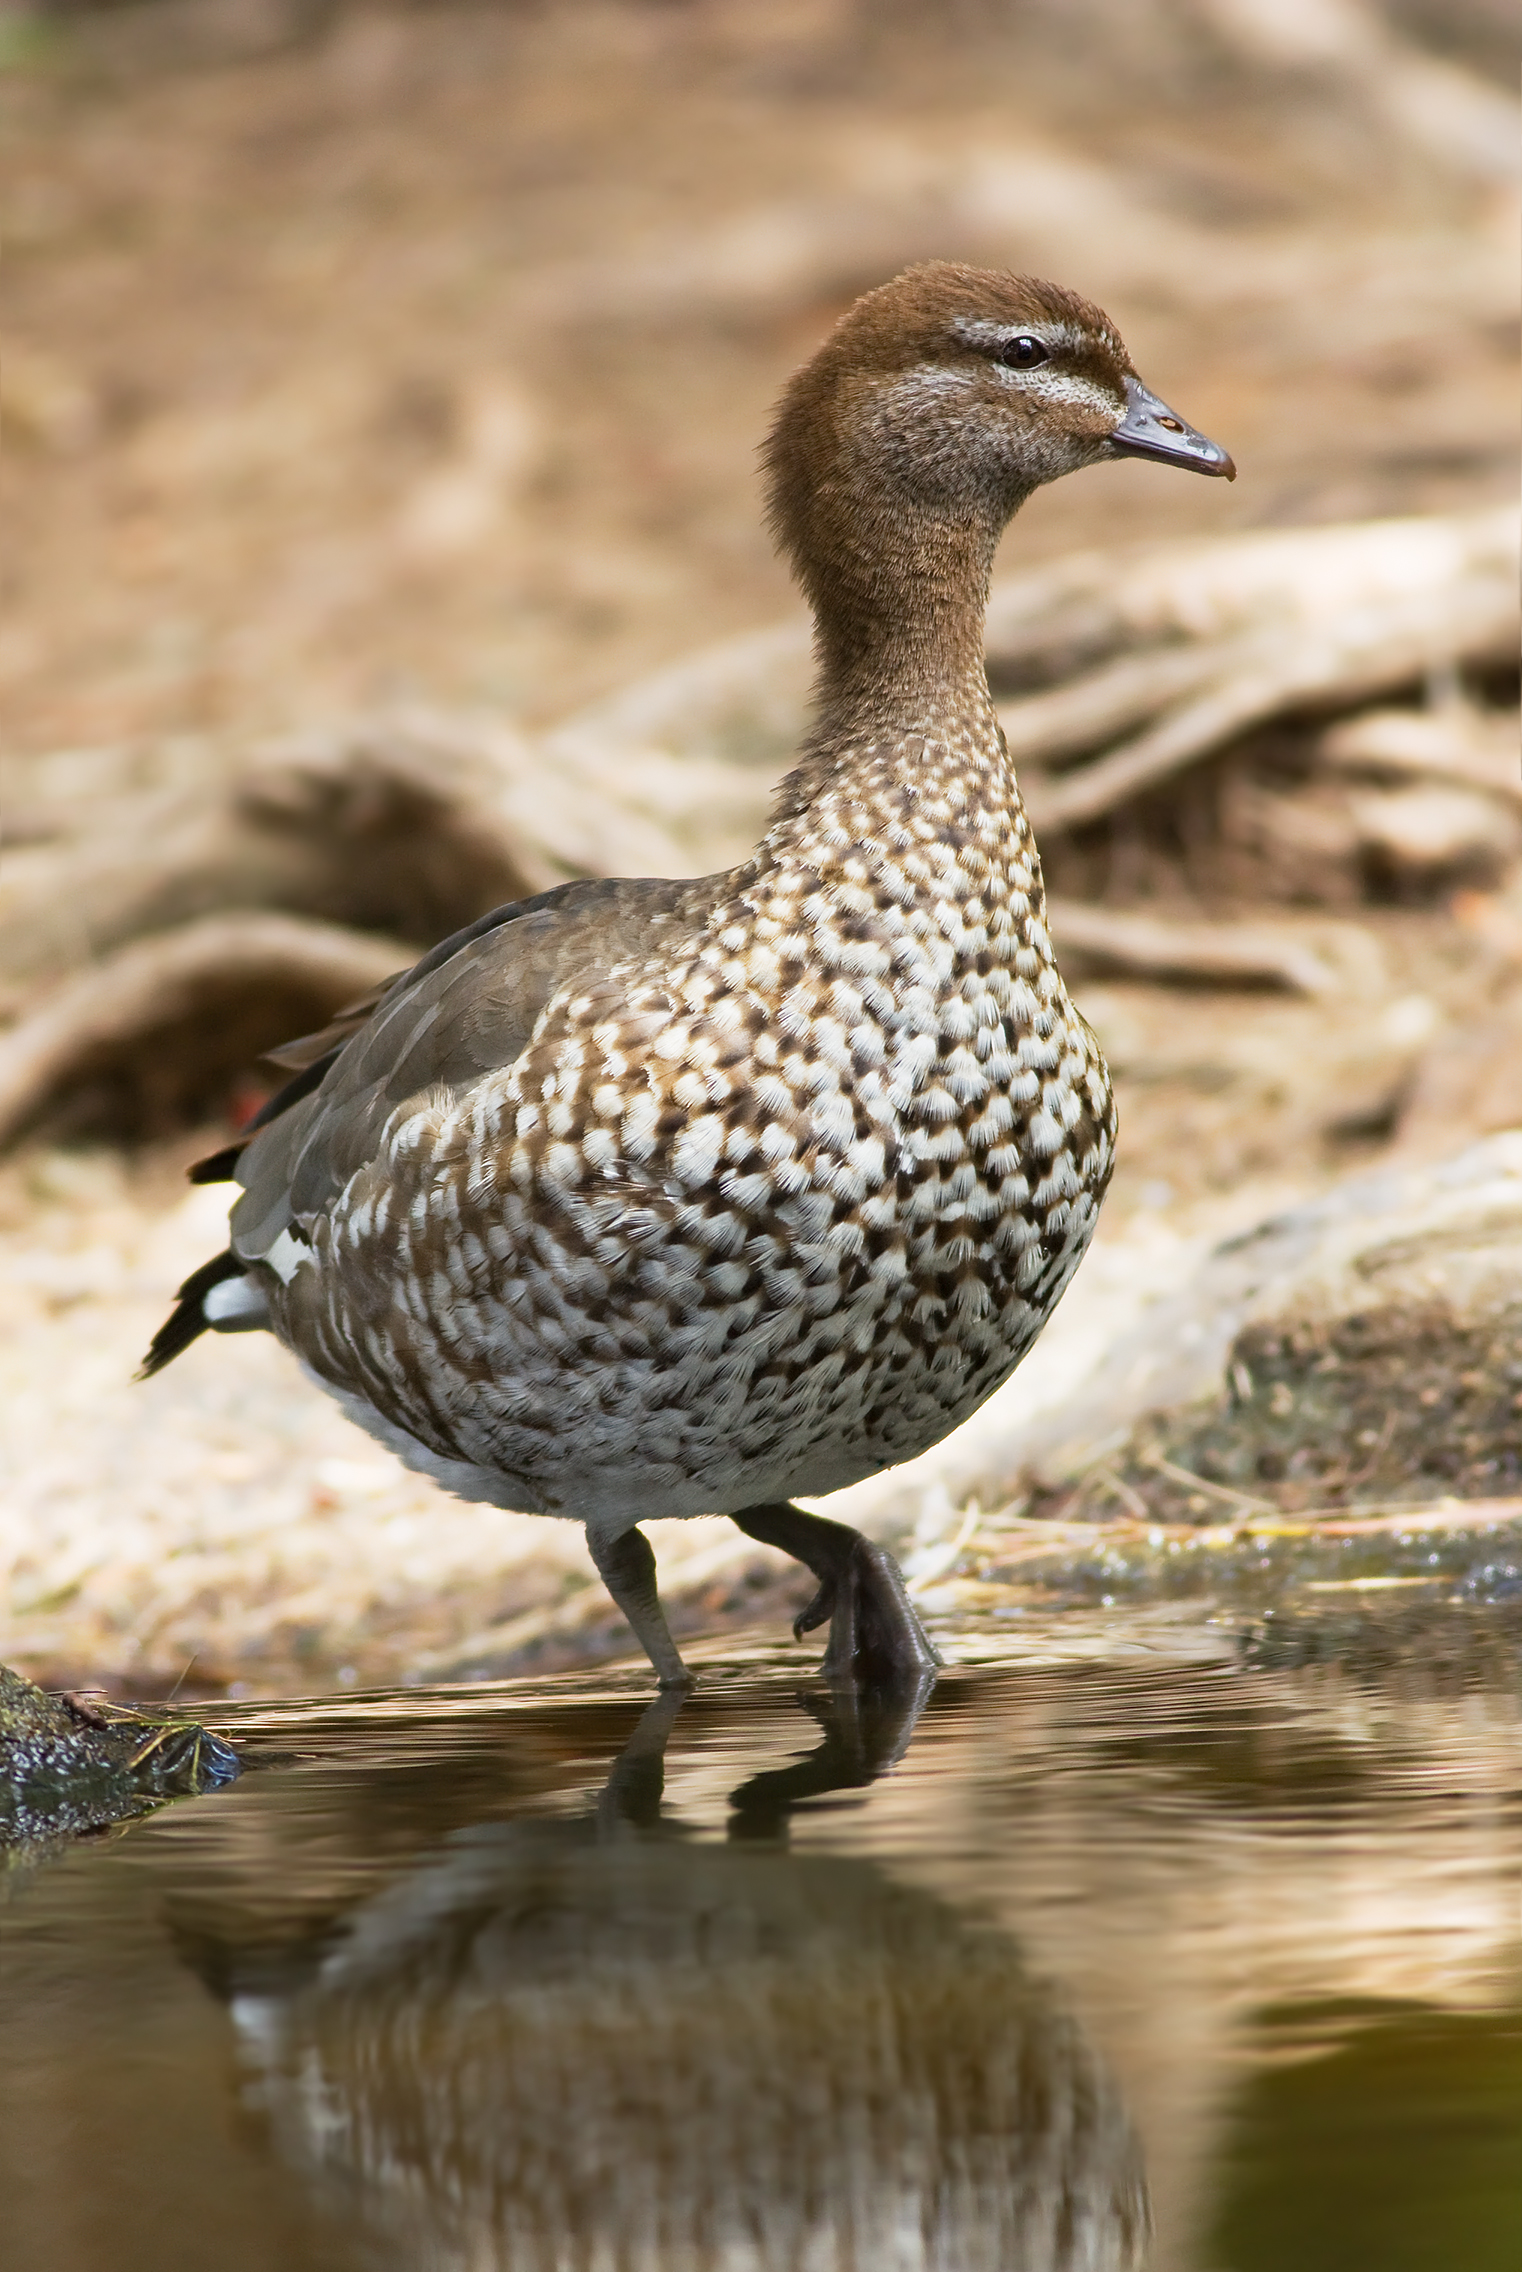 Australian wood duck - Wikipedia